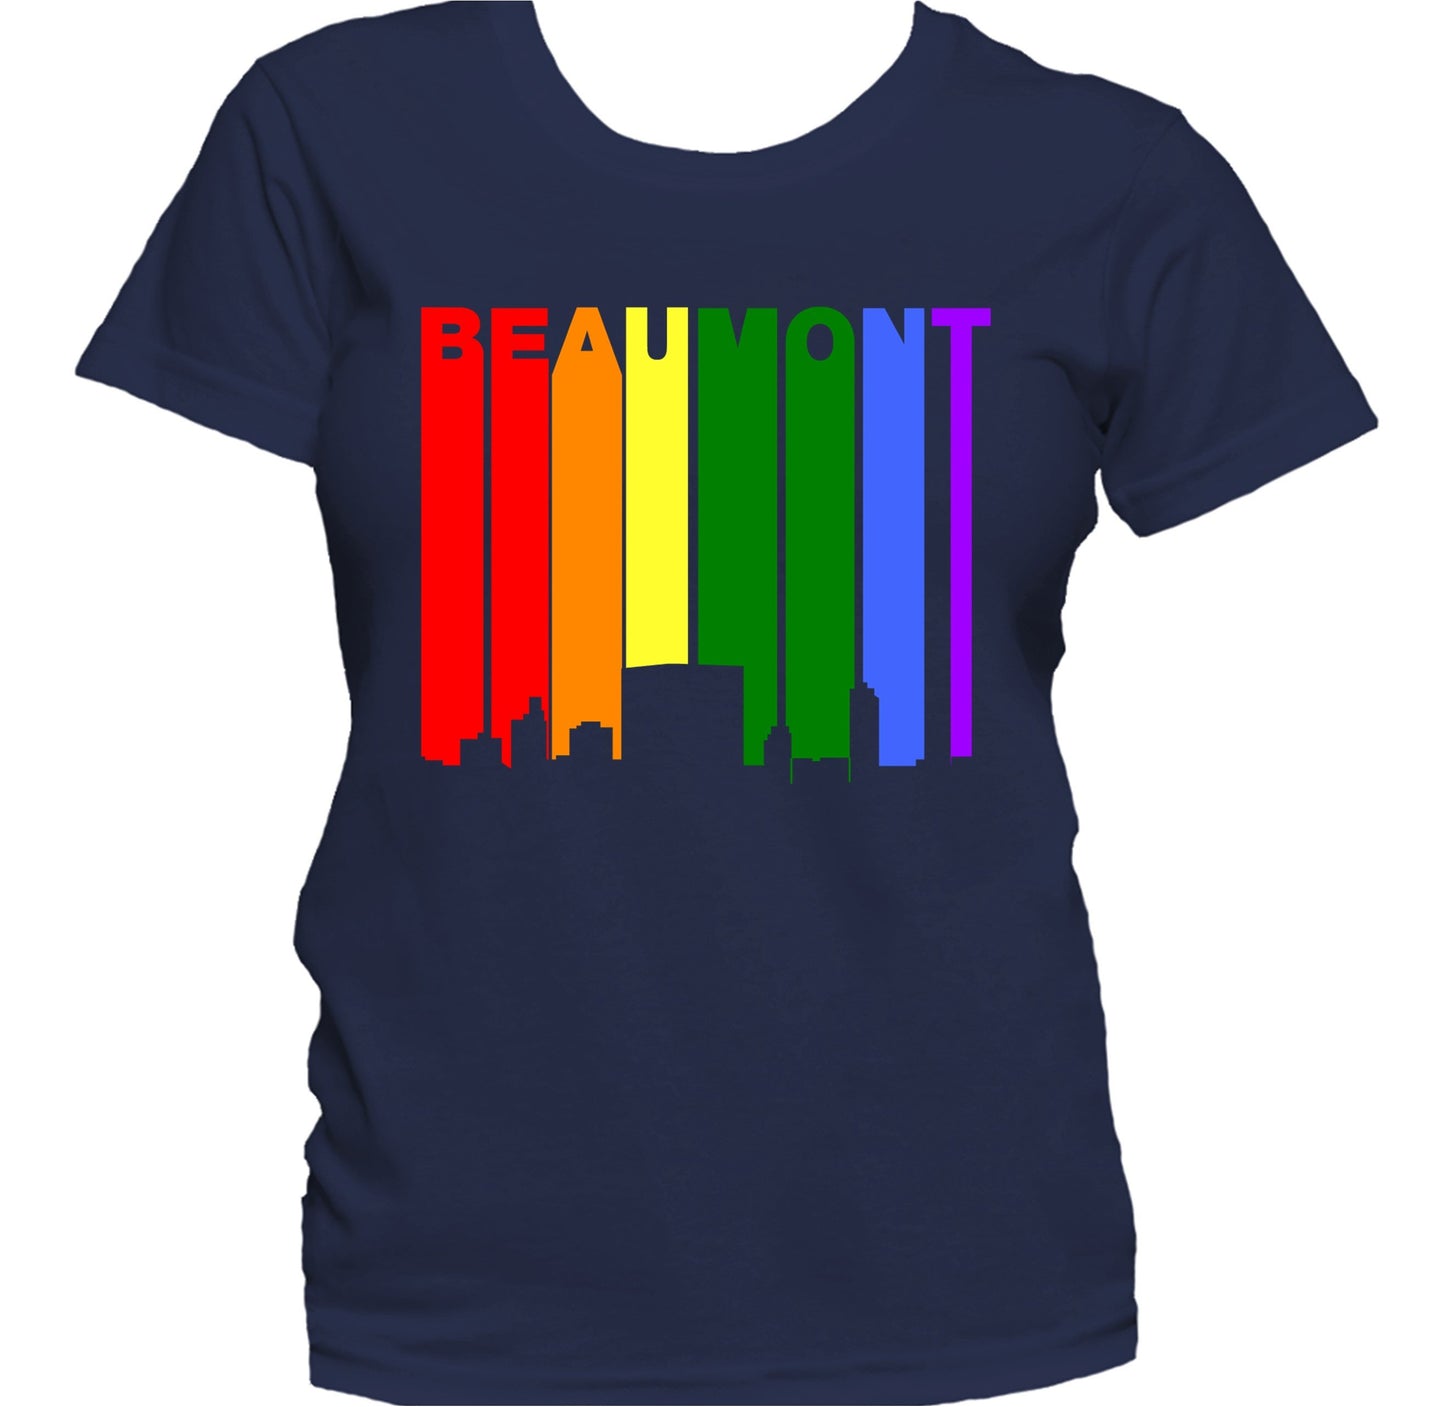 Beaumont Texas LGBTQ Gay Pride Rainbow Skyline Women's T-Shirt